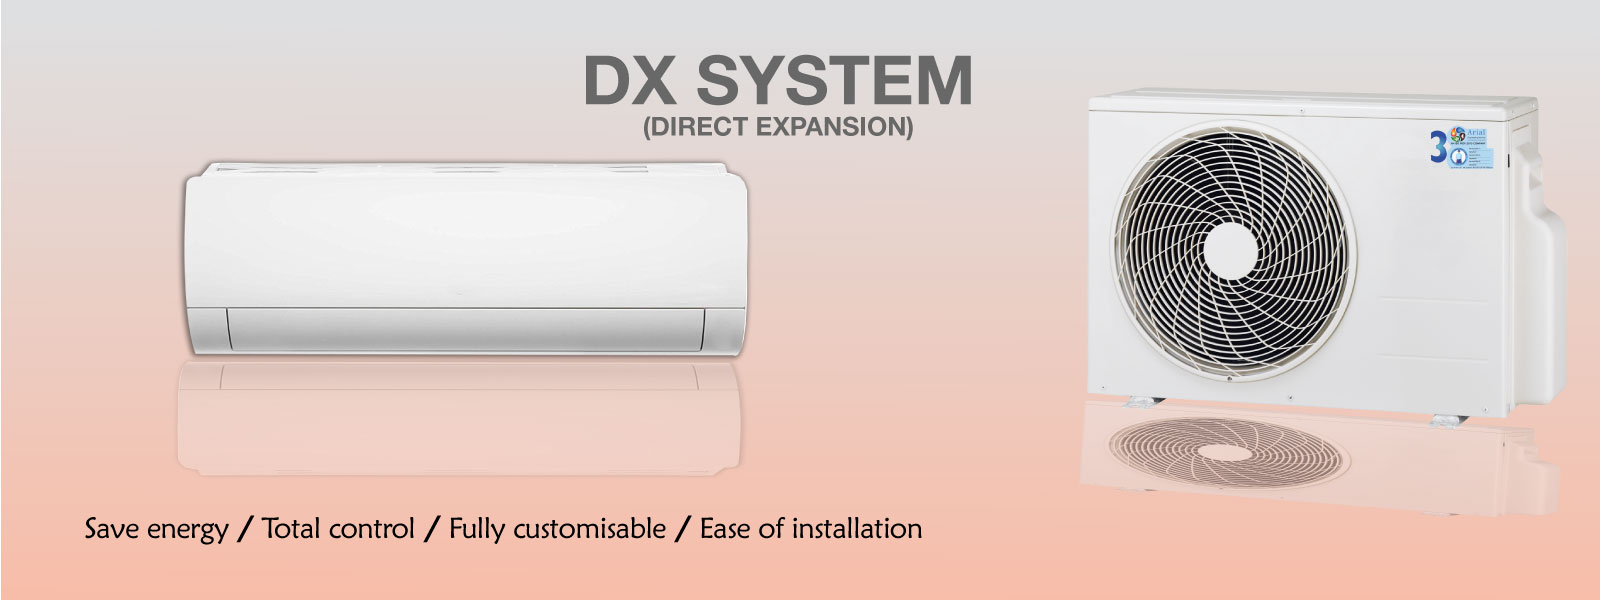 DX System